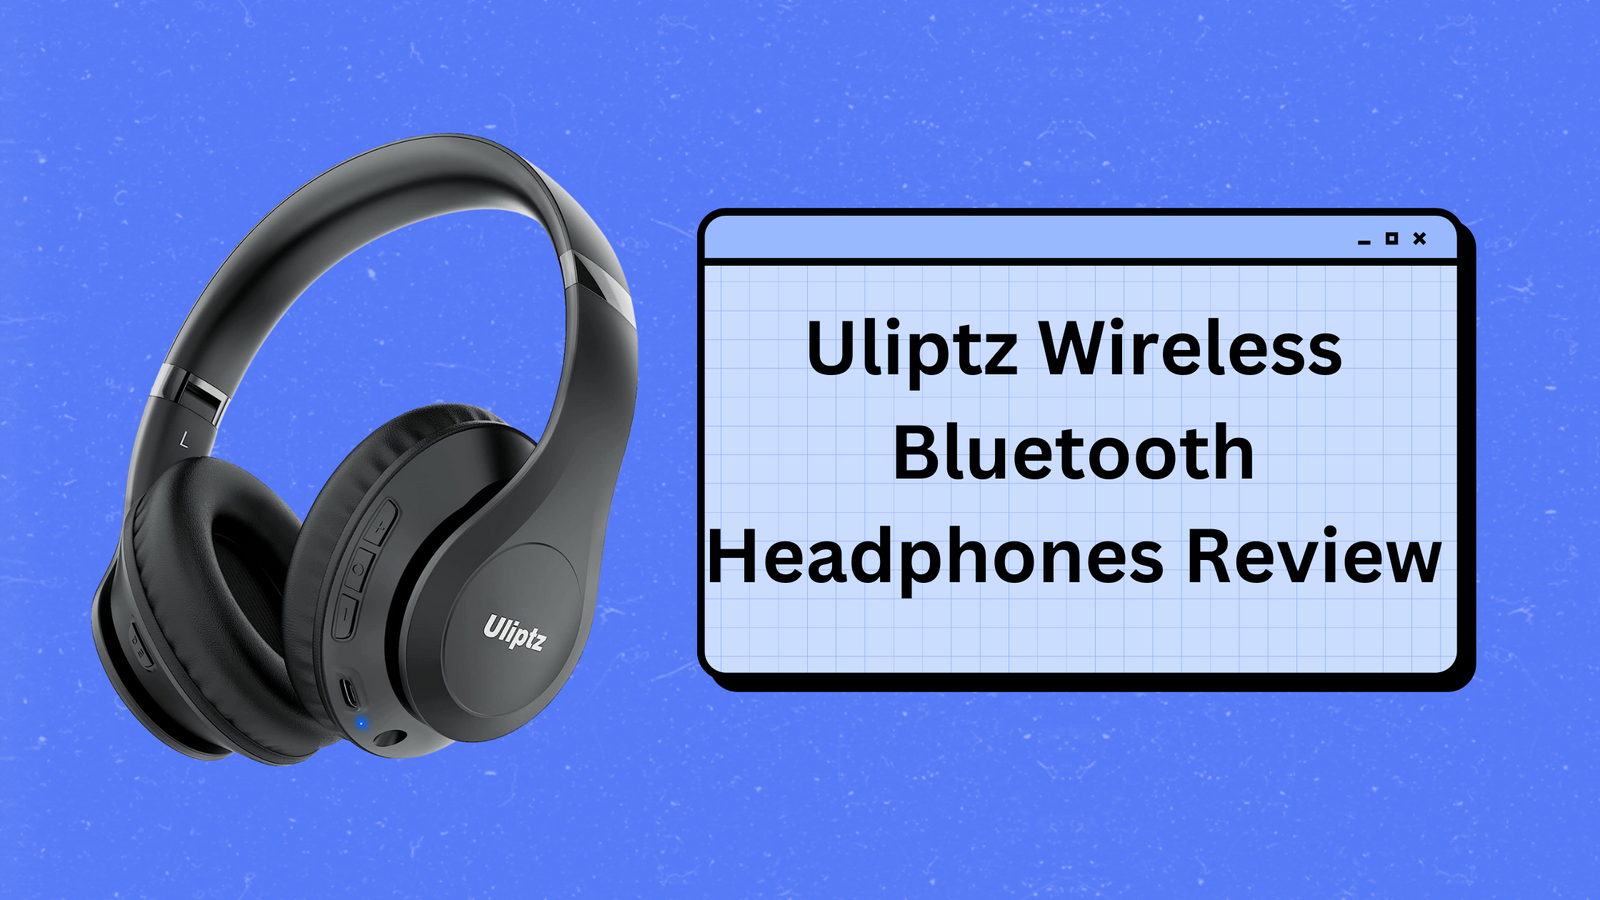 Uliptz Wireless Bluetooth Headphones Review